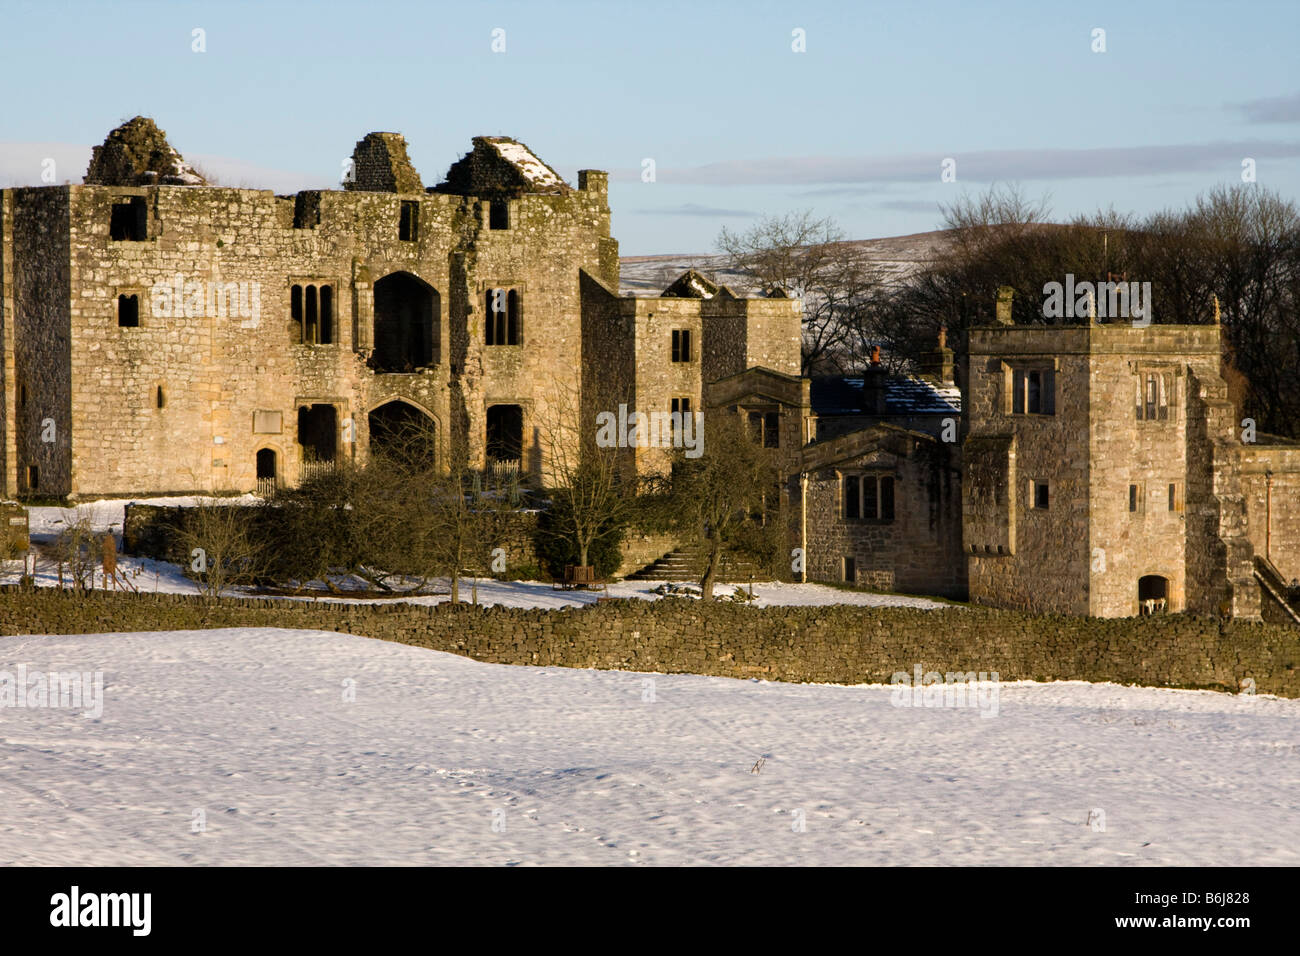 Barden Turm Ruinen Wharfedale Winterschnee Yorkshire Dales national park England uk gb Stockfoto